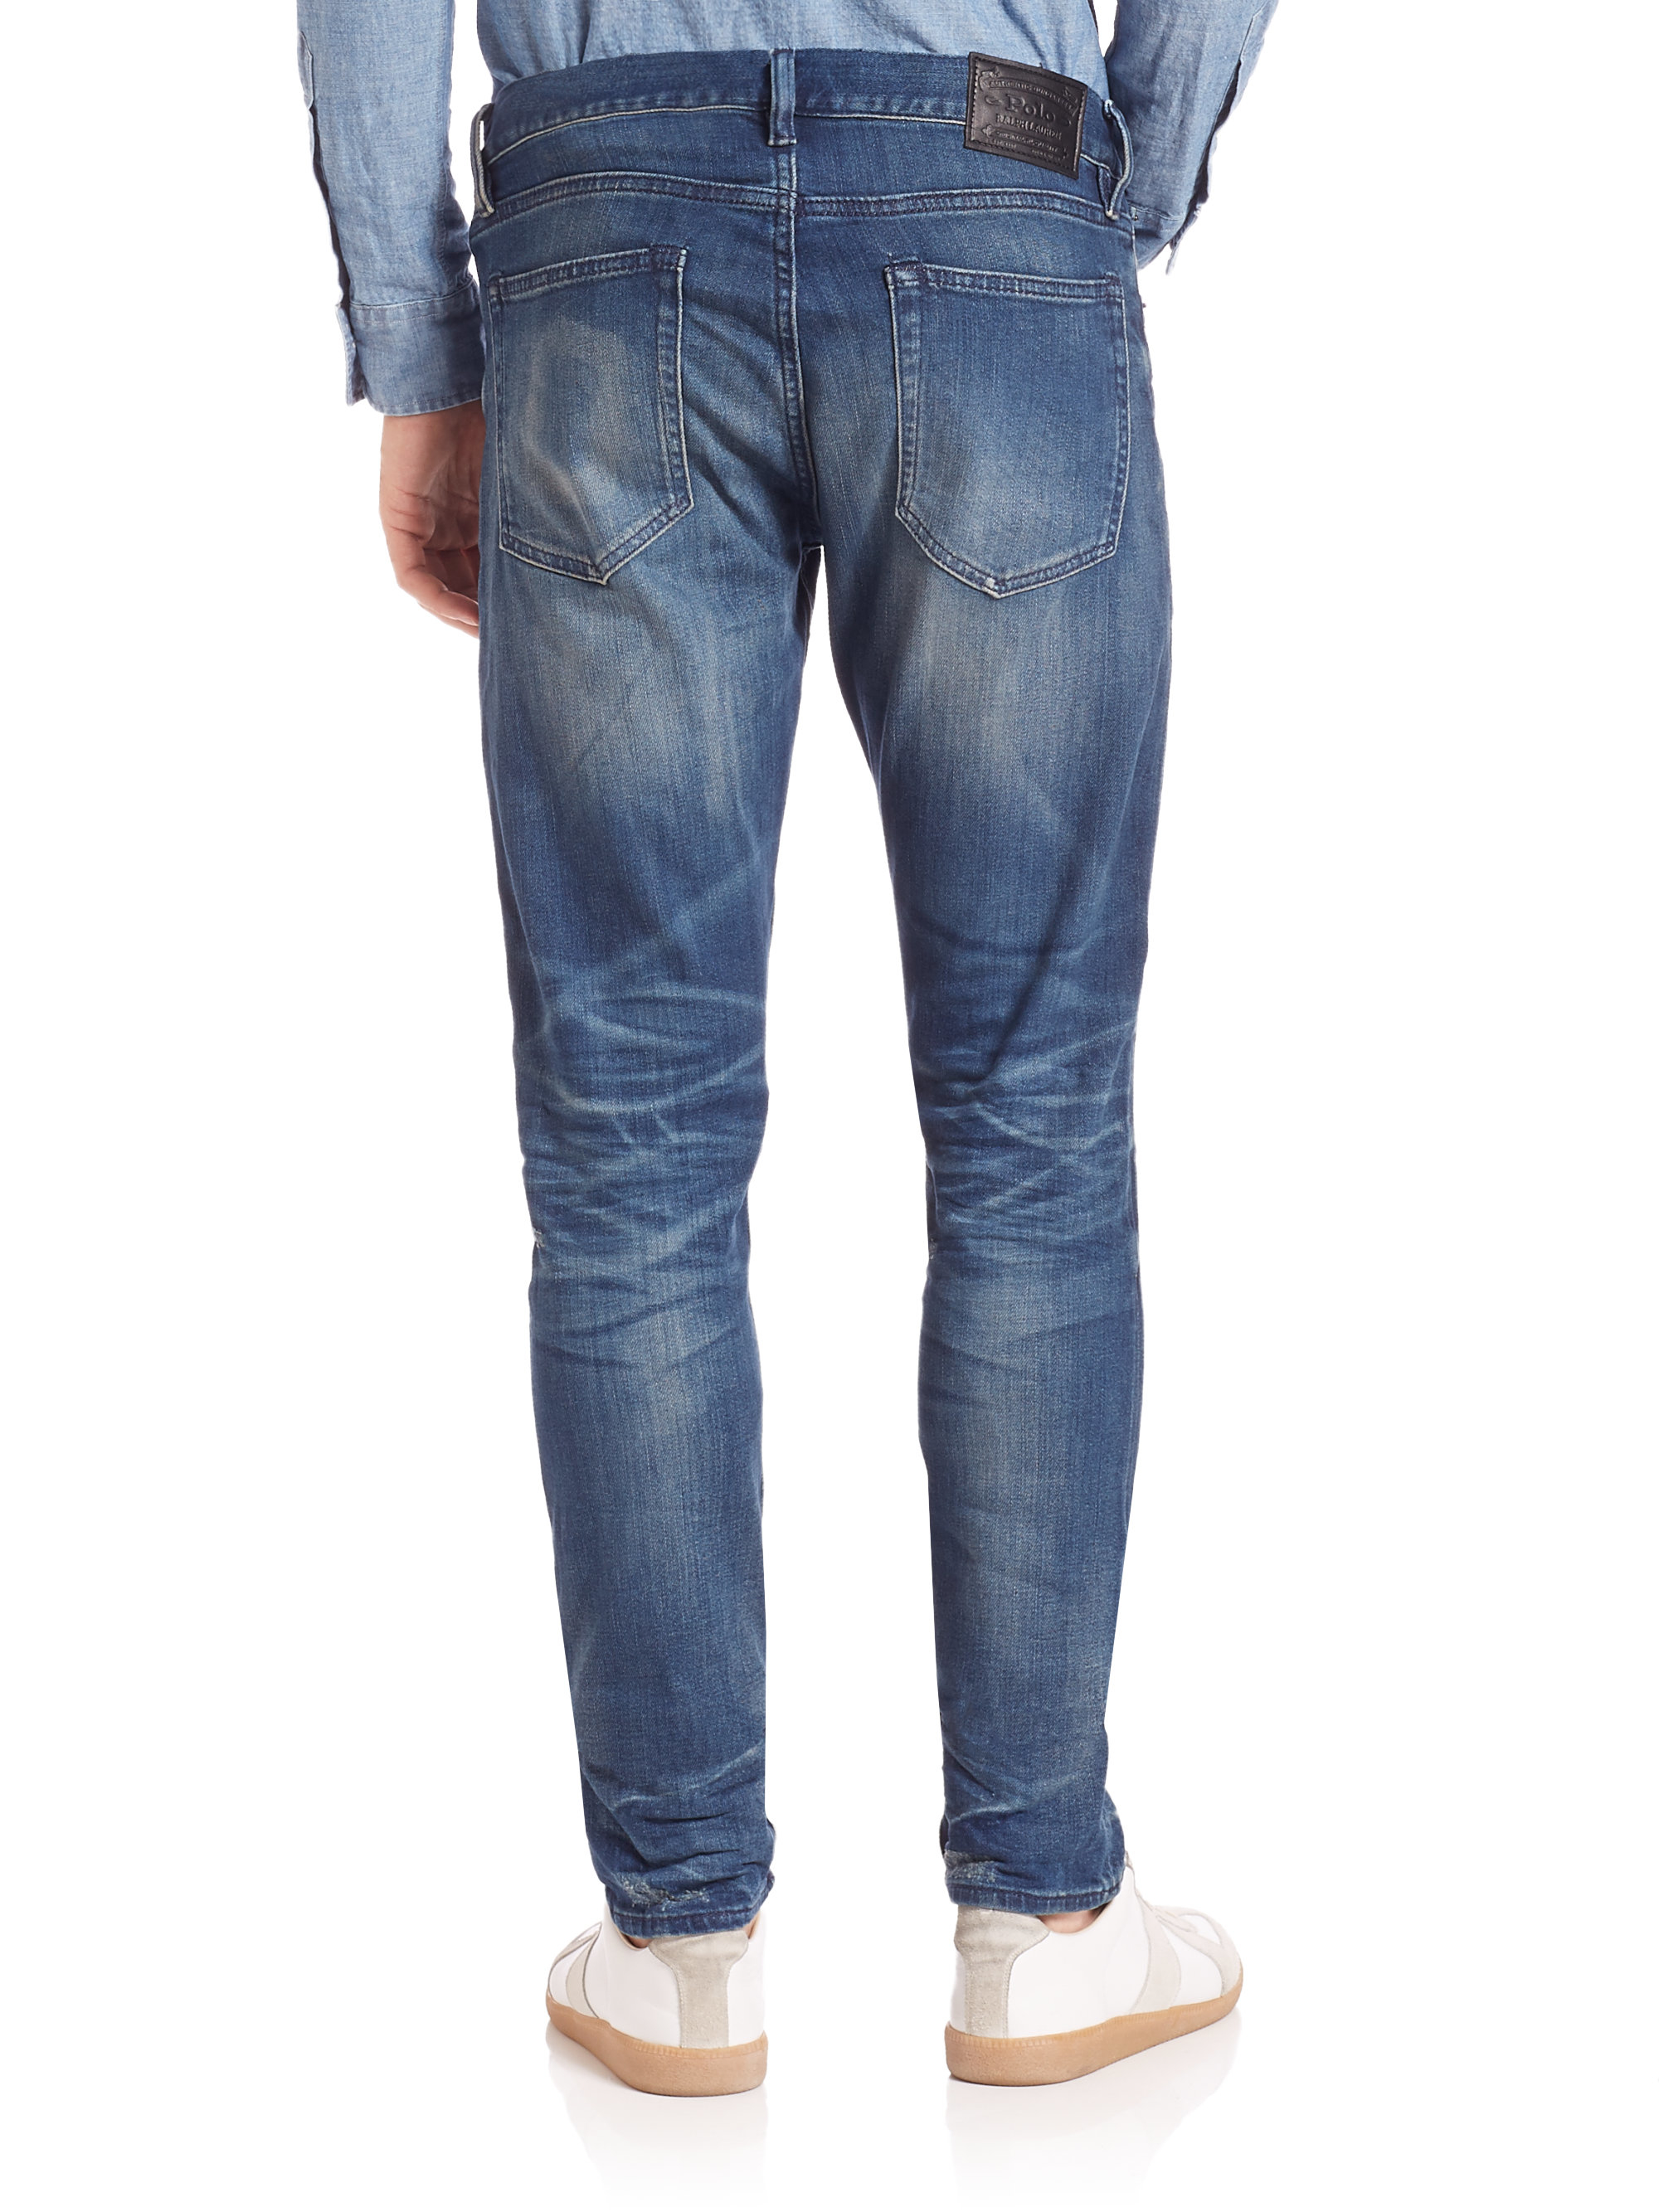 Polo Ralph Lauren Sullivan Slim-fit Jeans in Blue for Men - Lyst